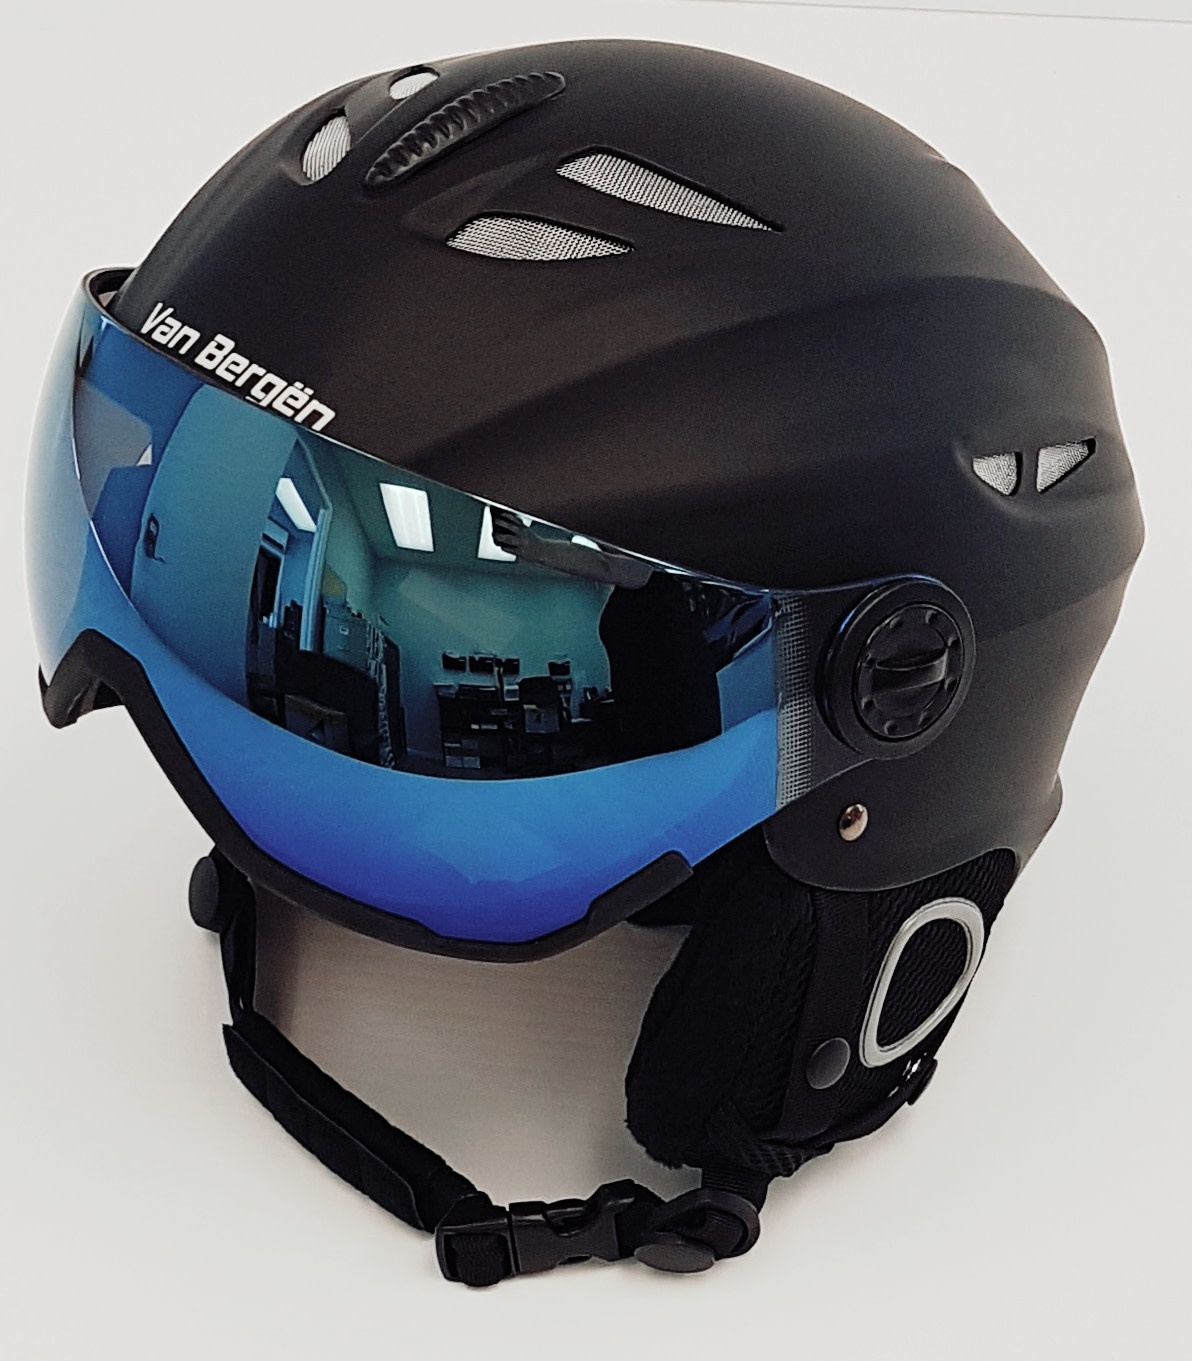 VB Black Senior Alpine Ski Helmet with Visor SAP Velogare